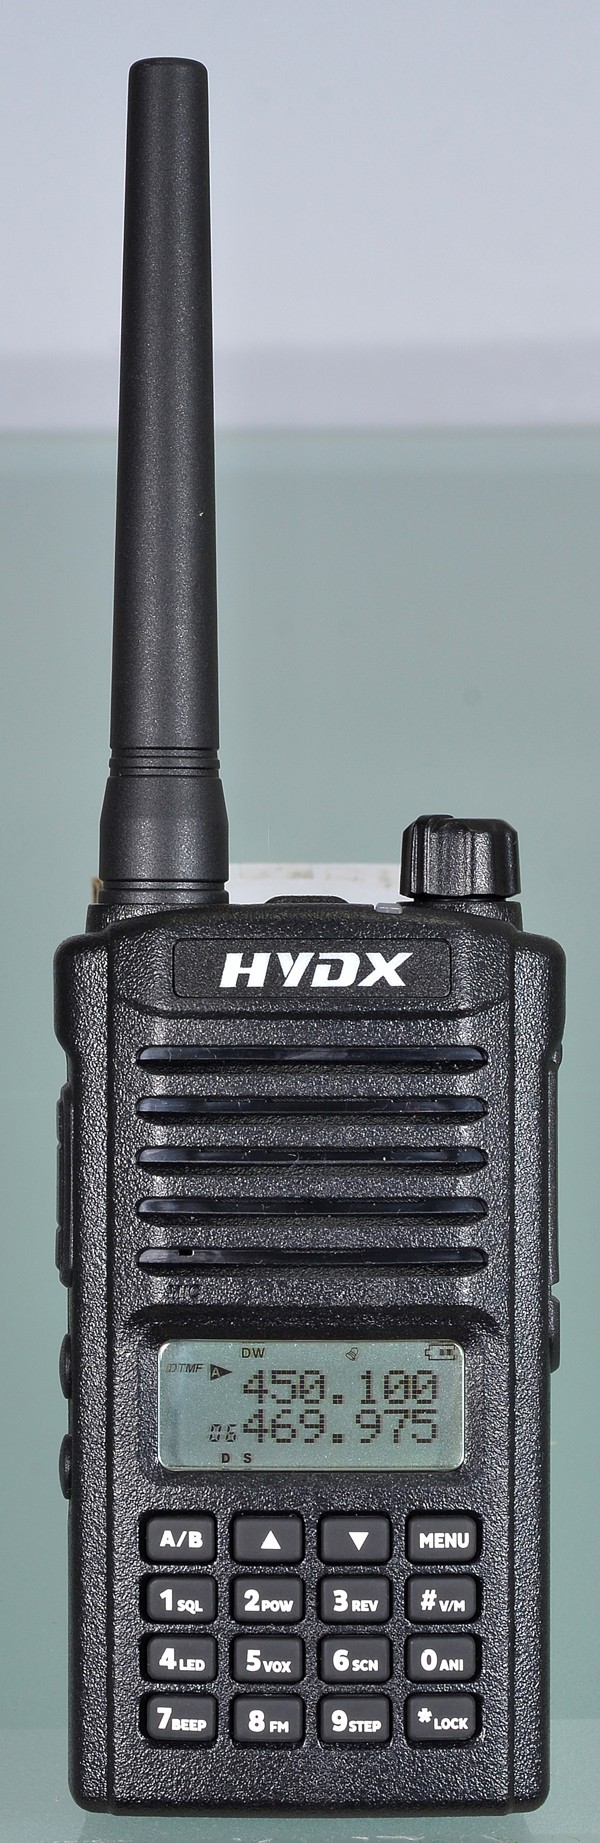 Professional Voice Encryption Communication Radio Intercom HYDX A1 CTCSS DCS